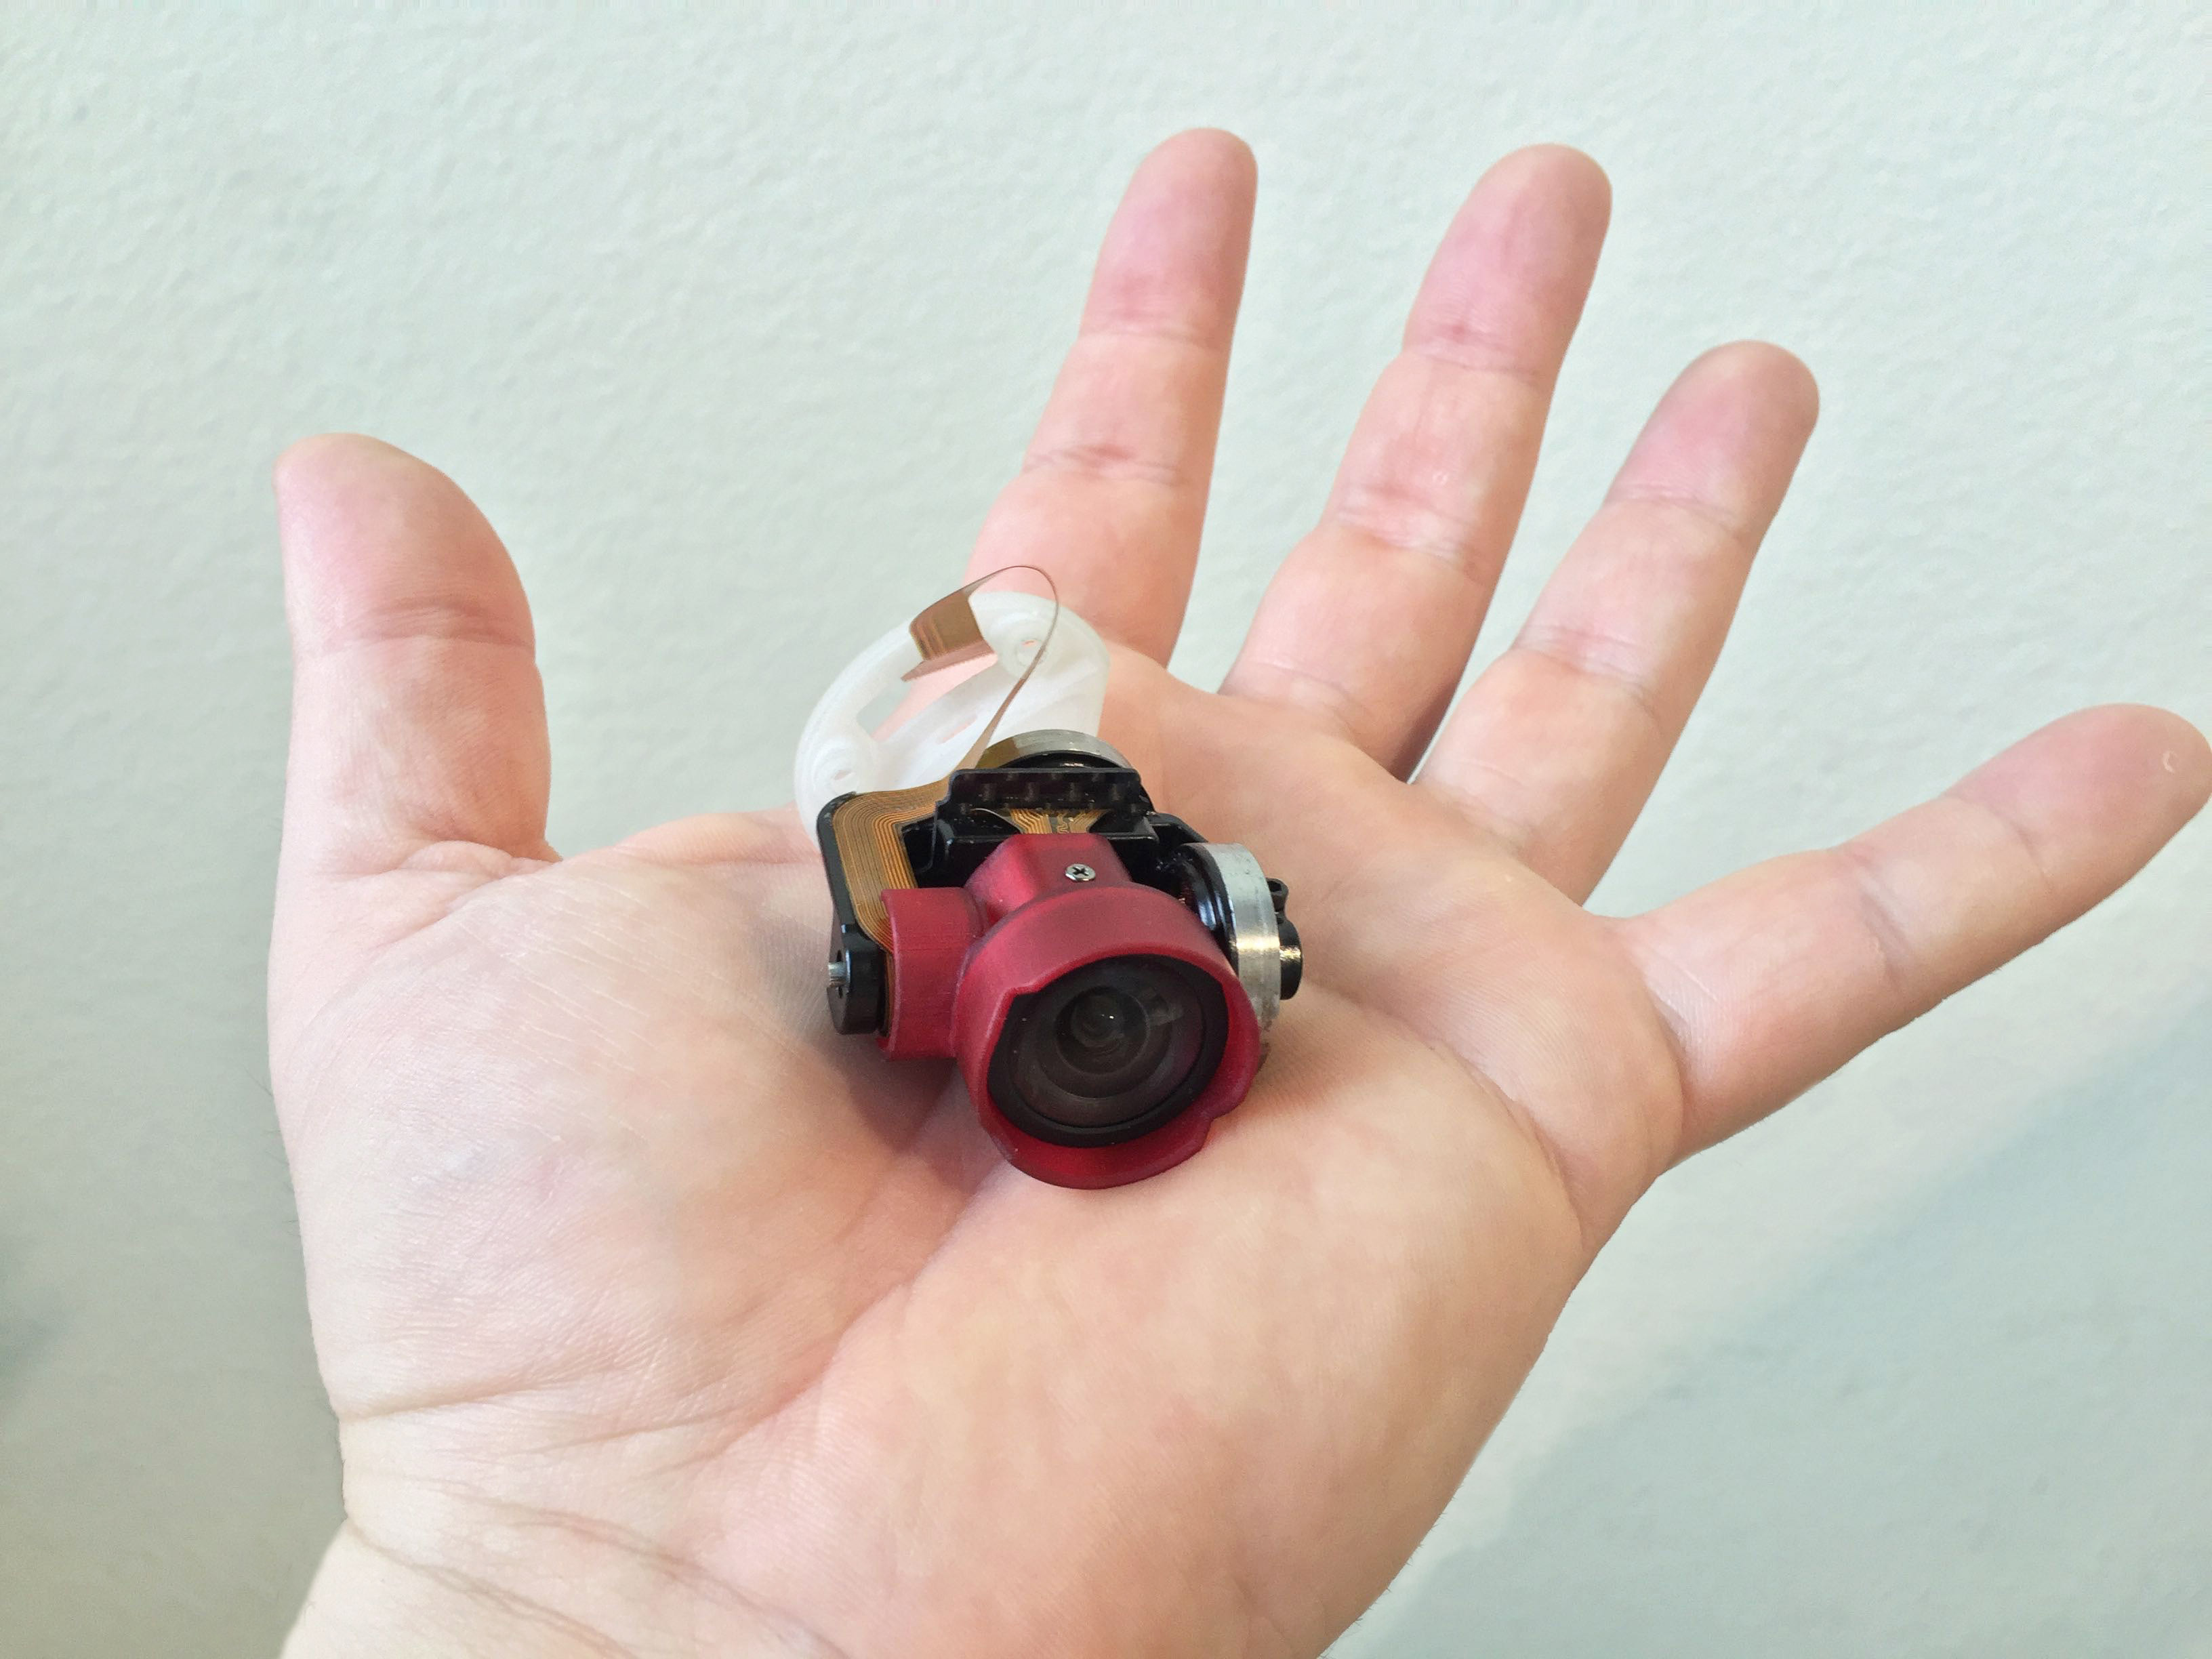 micro drone gimbal